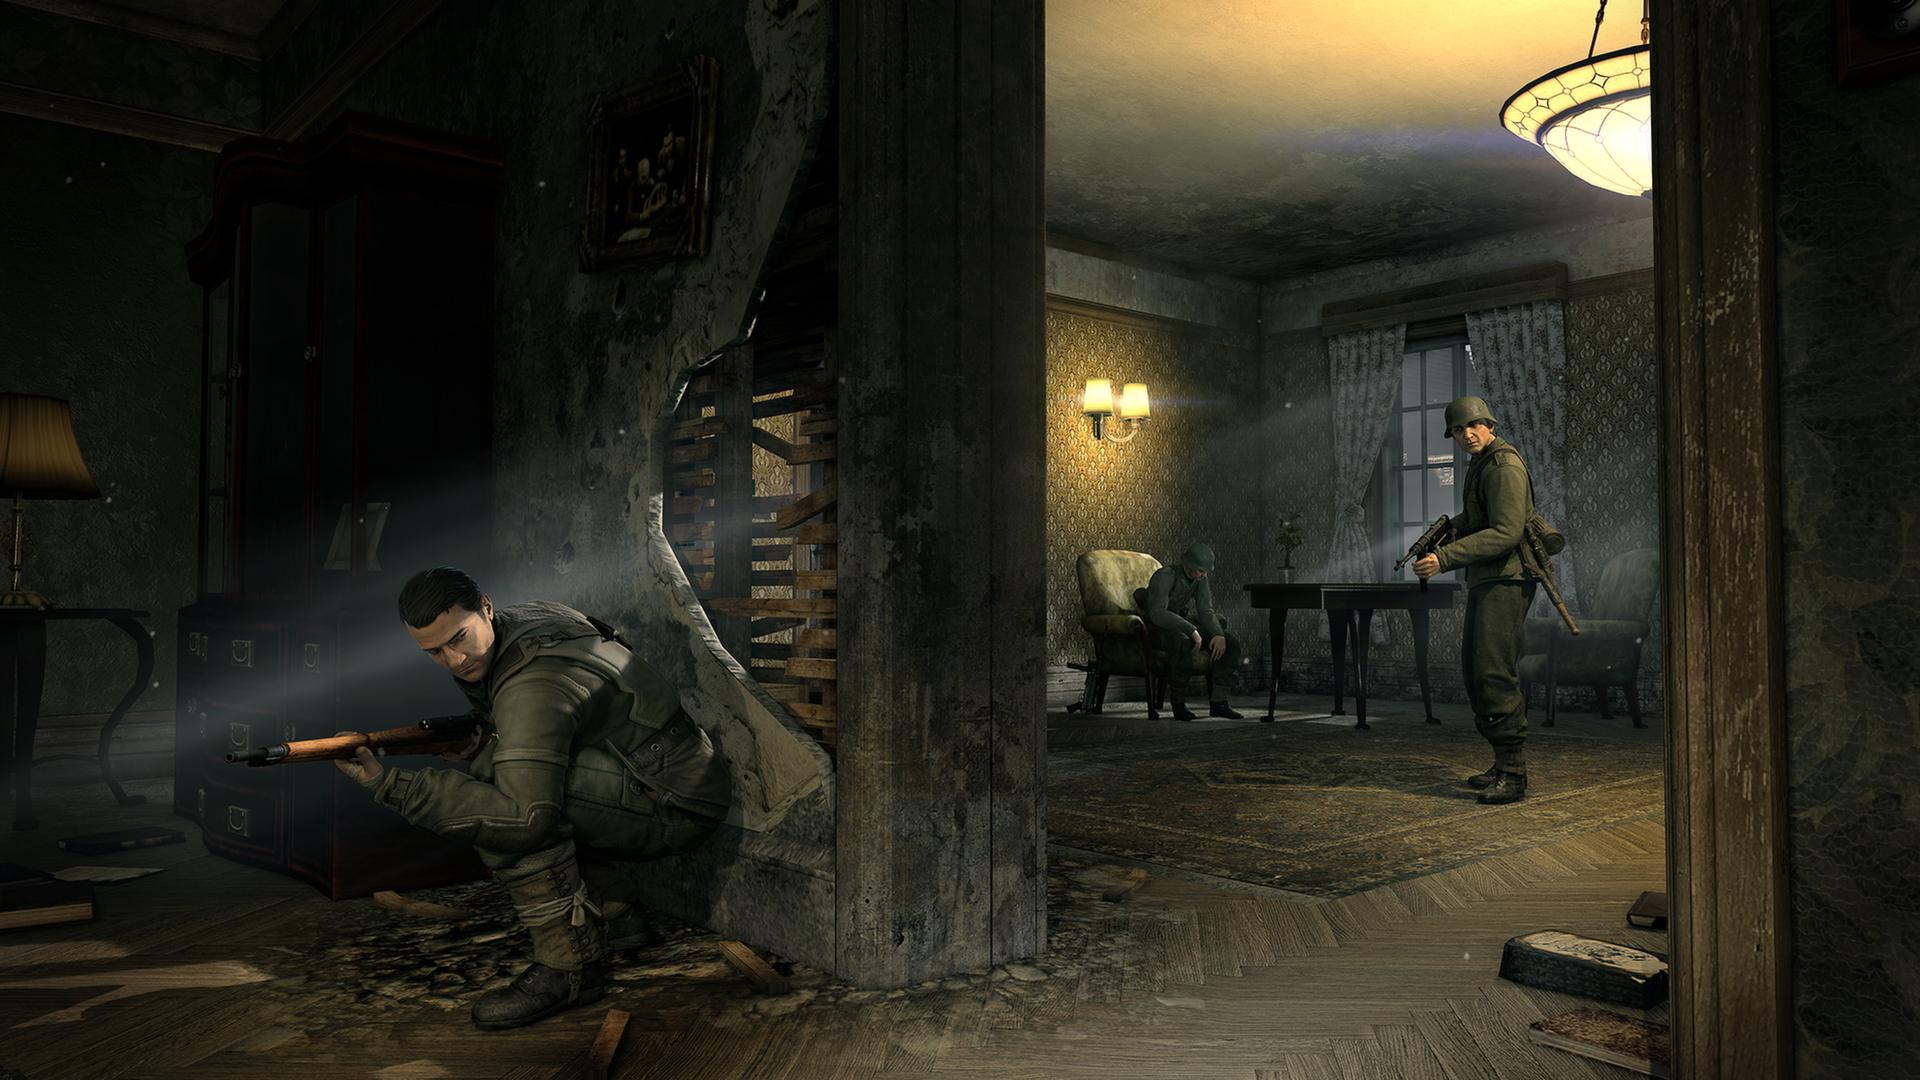 Screenshot №9 from game Sniper Elite V2